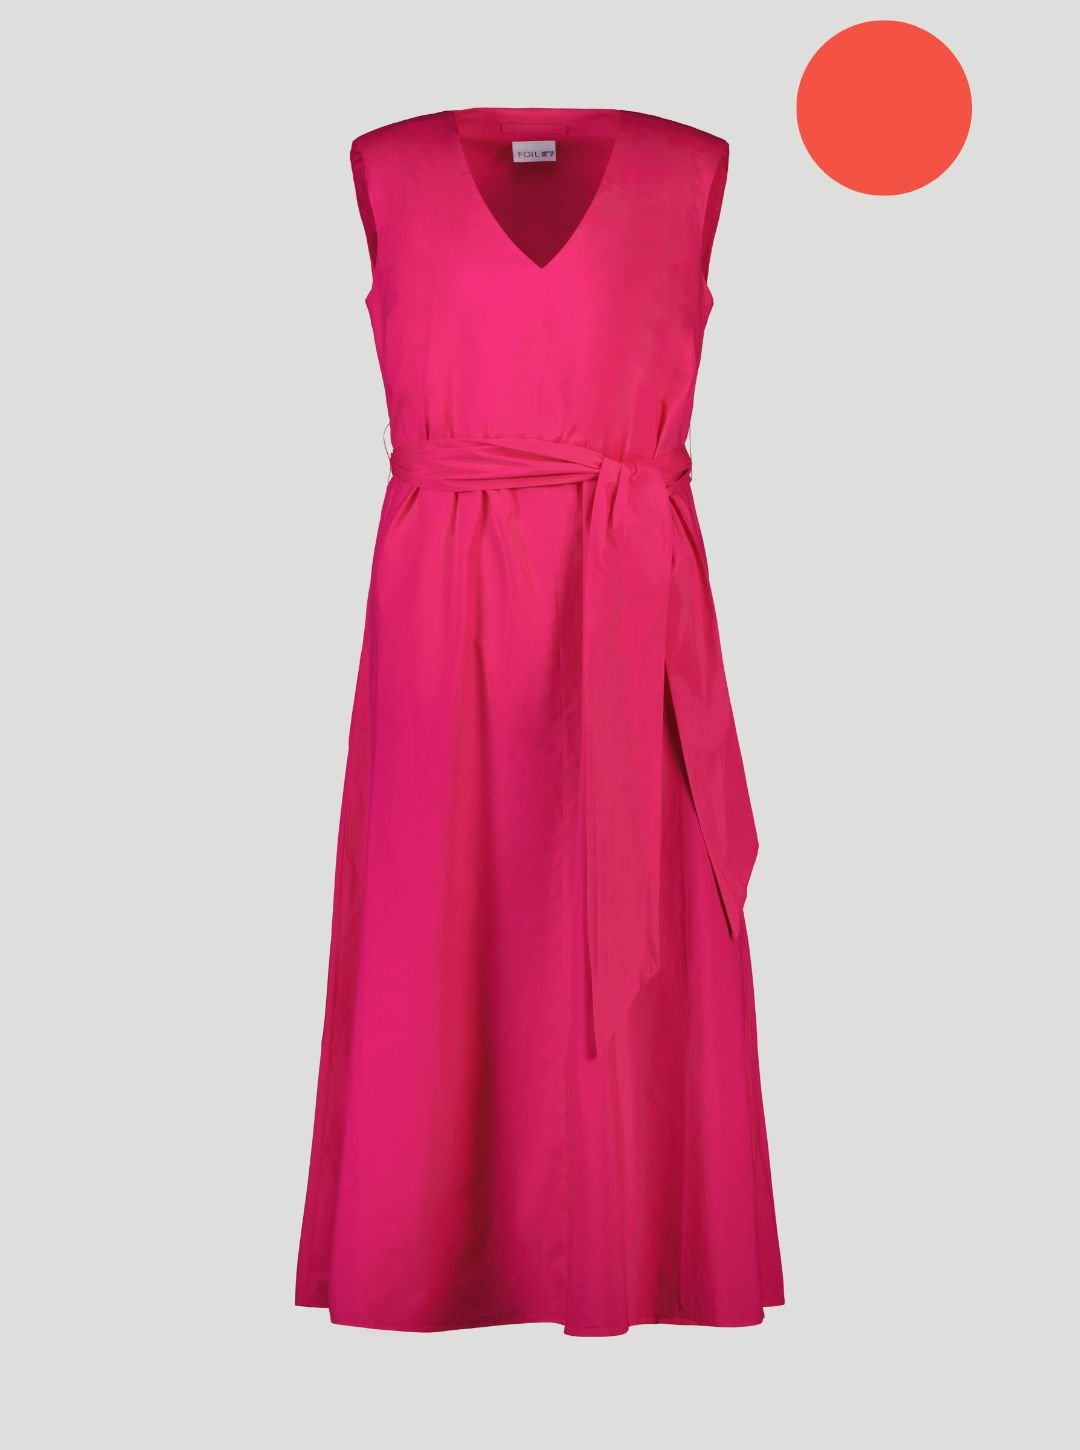 Shop Show Stopper Dress in Jaffa Red by Foil - Foil